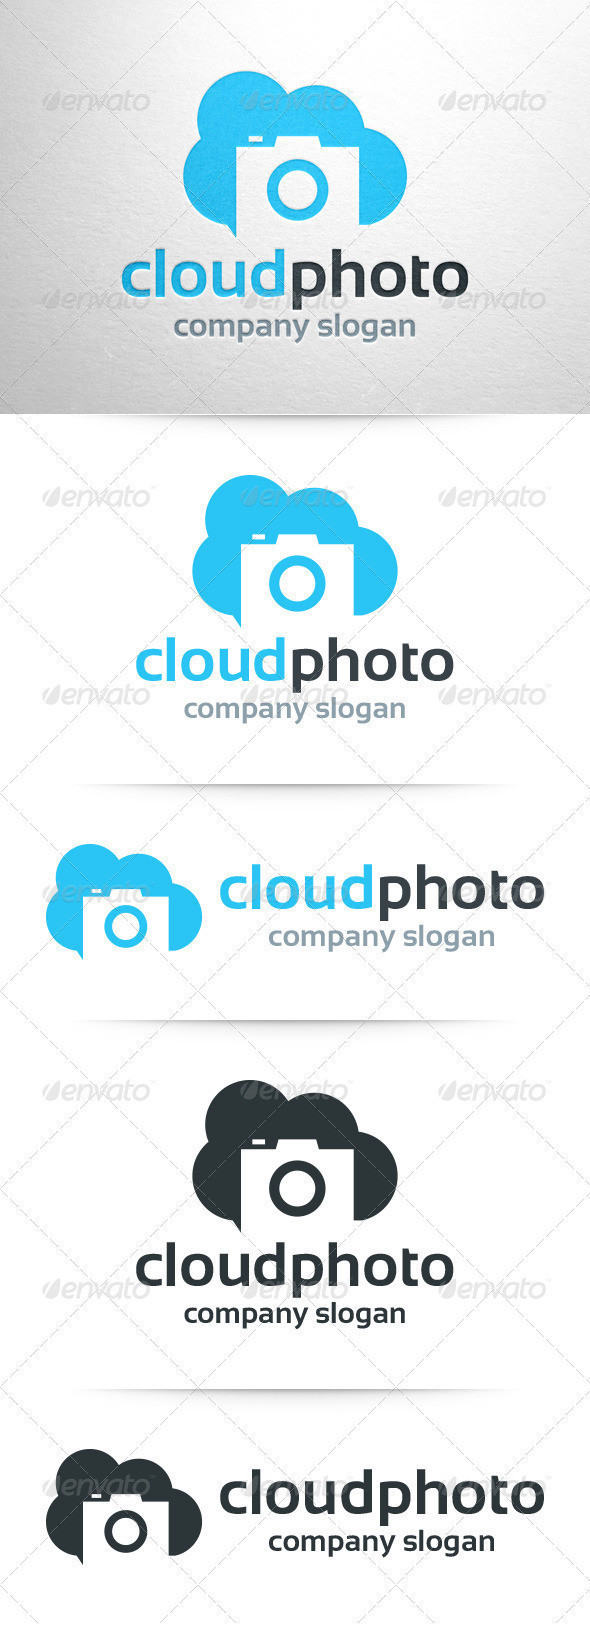 Cloud photo logo